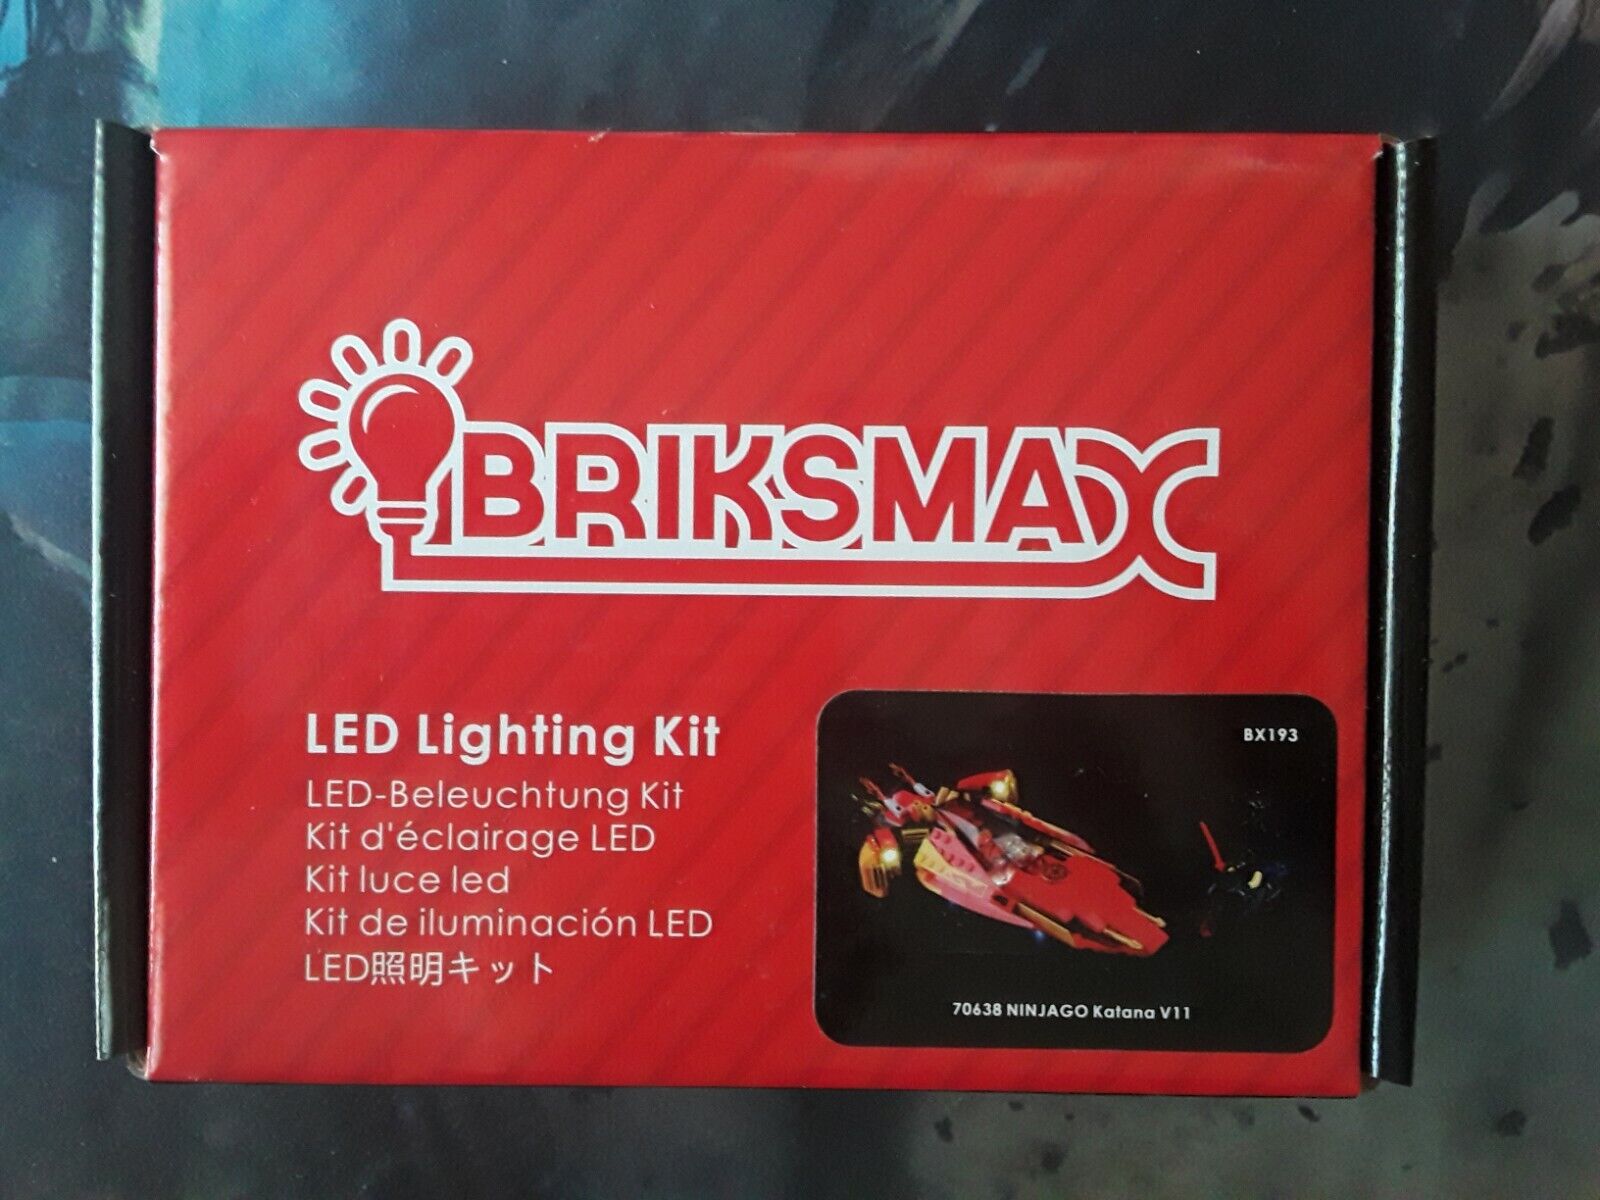 Briksmax - LED Lighting Kit BX193 - For 70638 Ninjago Katan V11 (MISB)